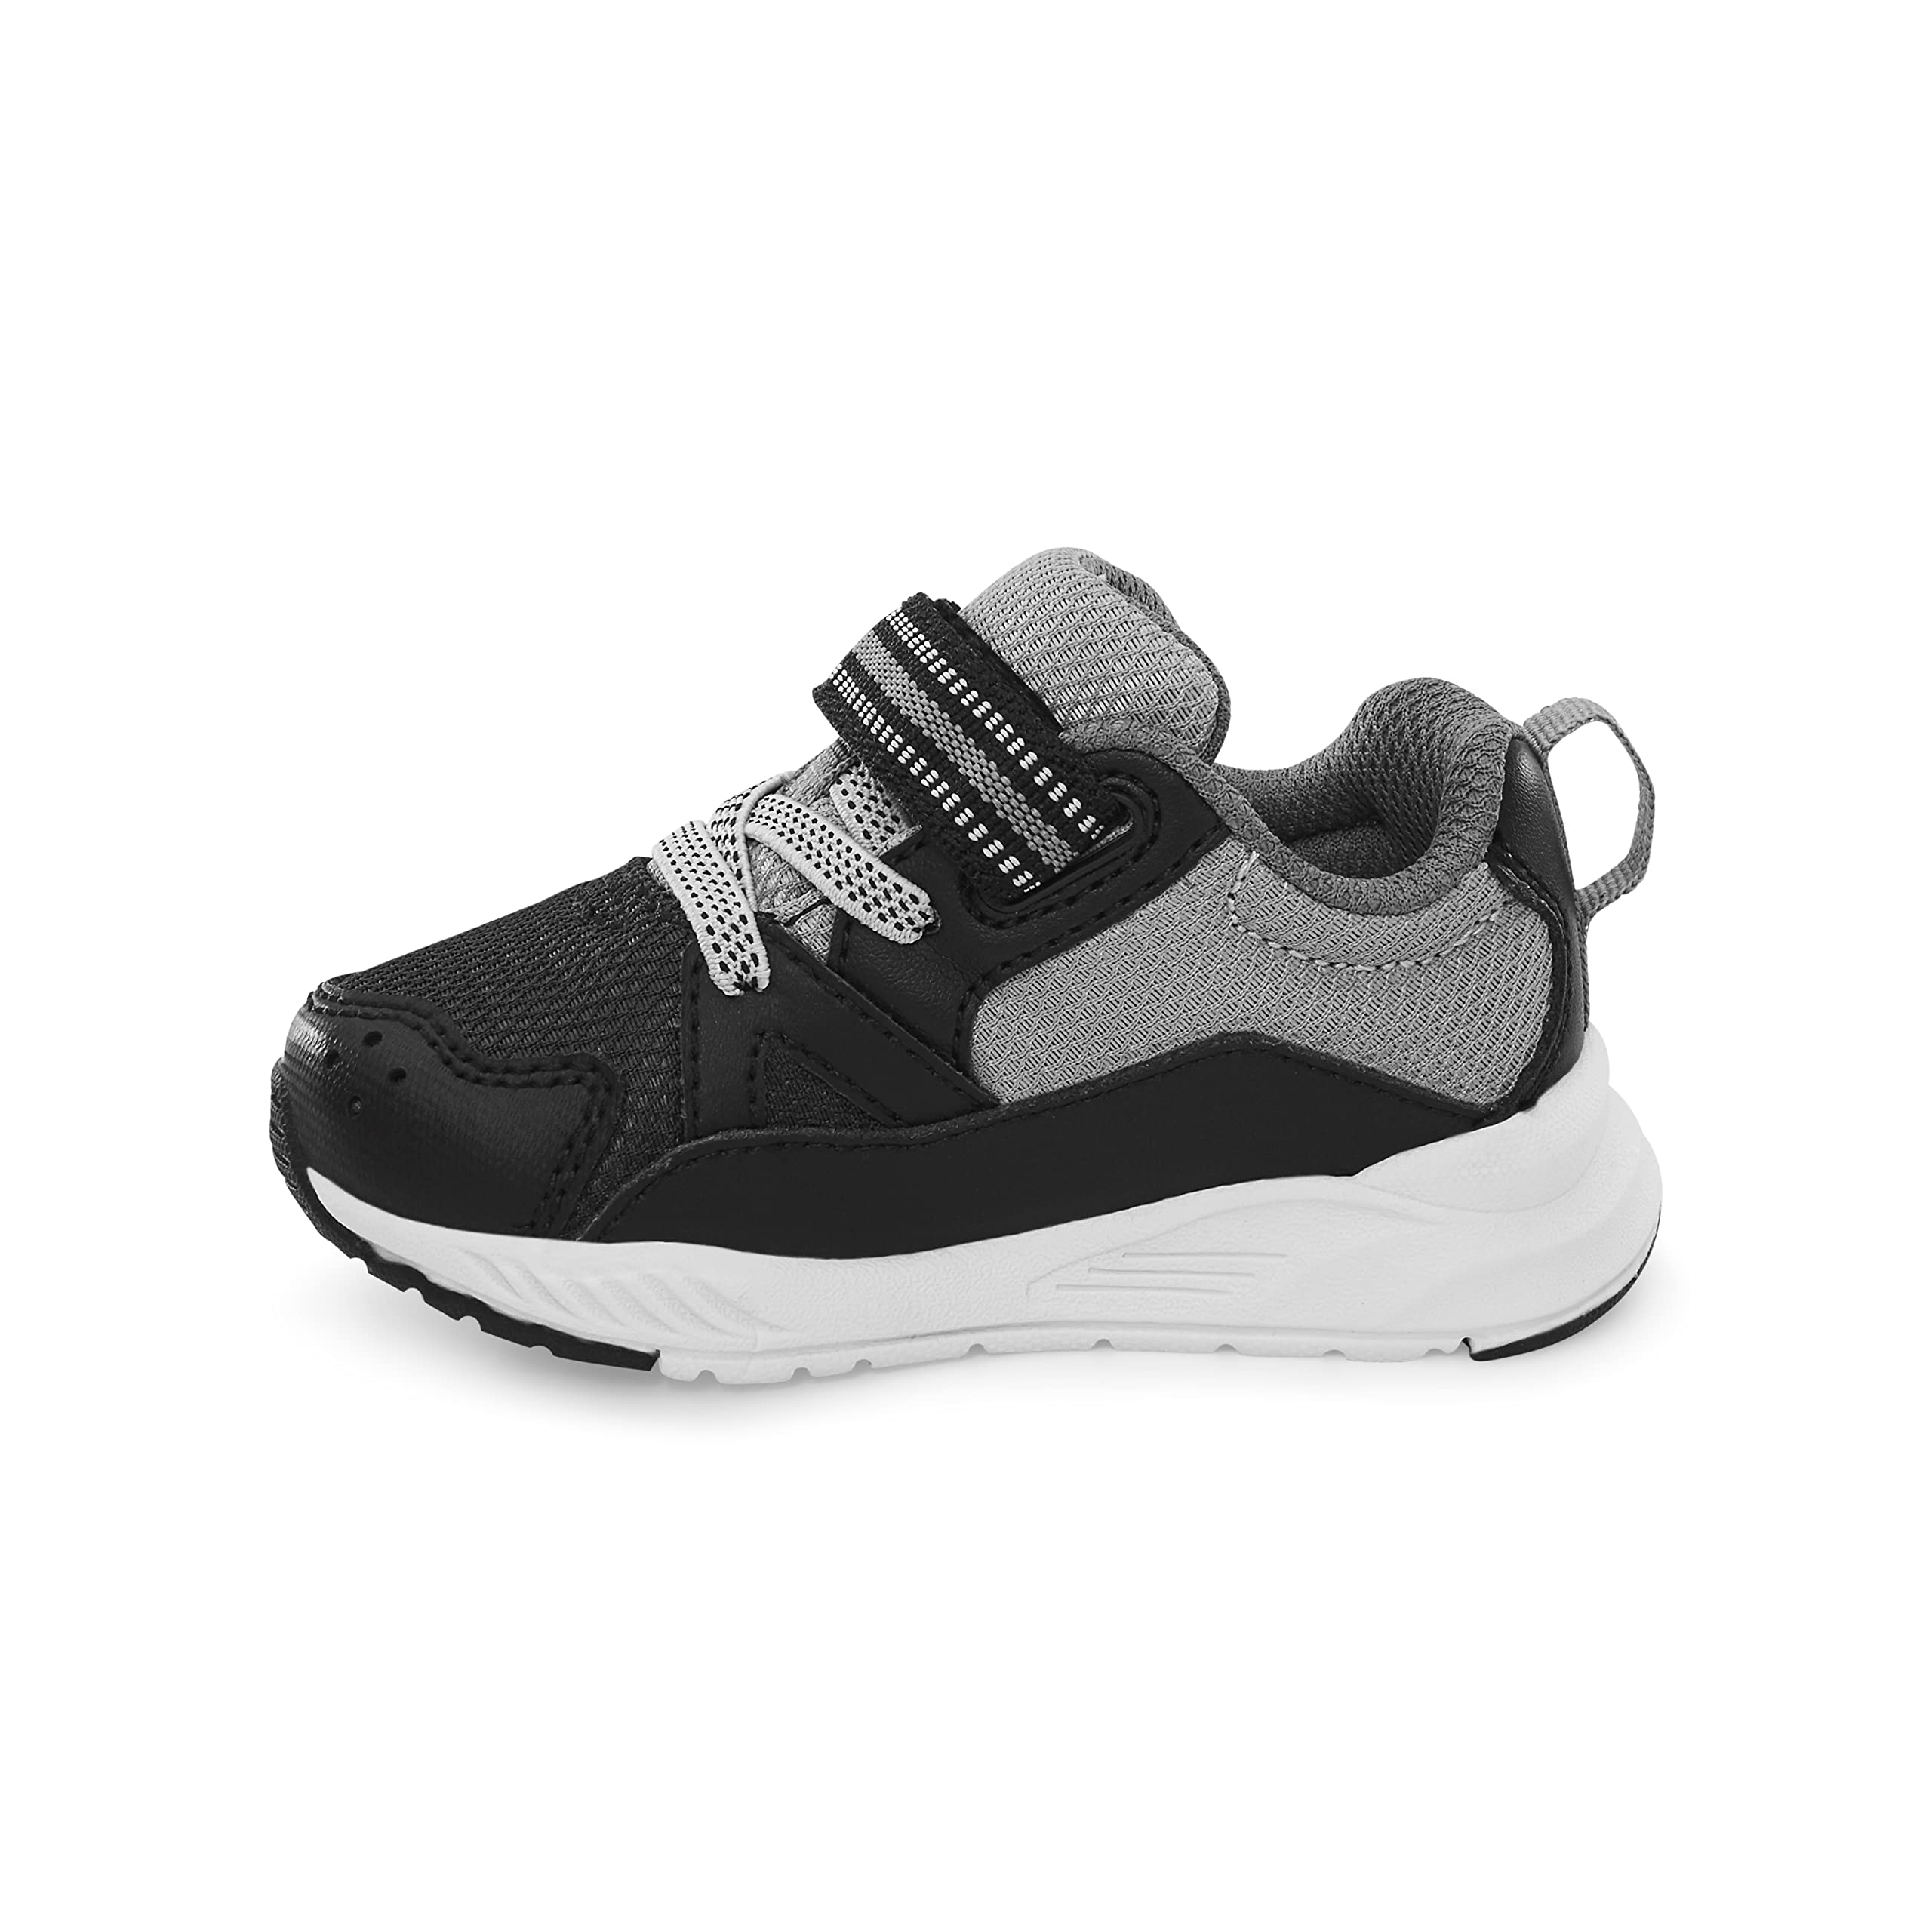 Stride rite Boy's M2P Journey2 Adaptable Athletic Sneaker, Black, 2 X-Wide Little Kid